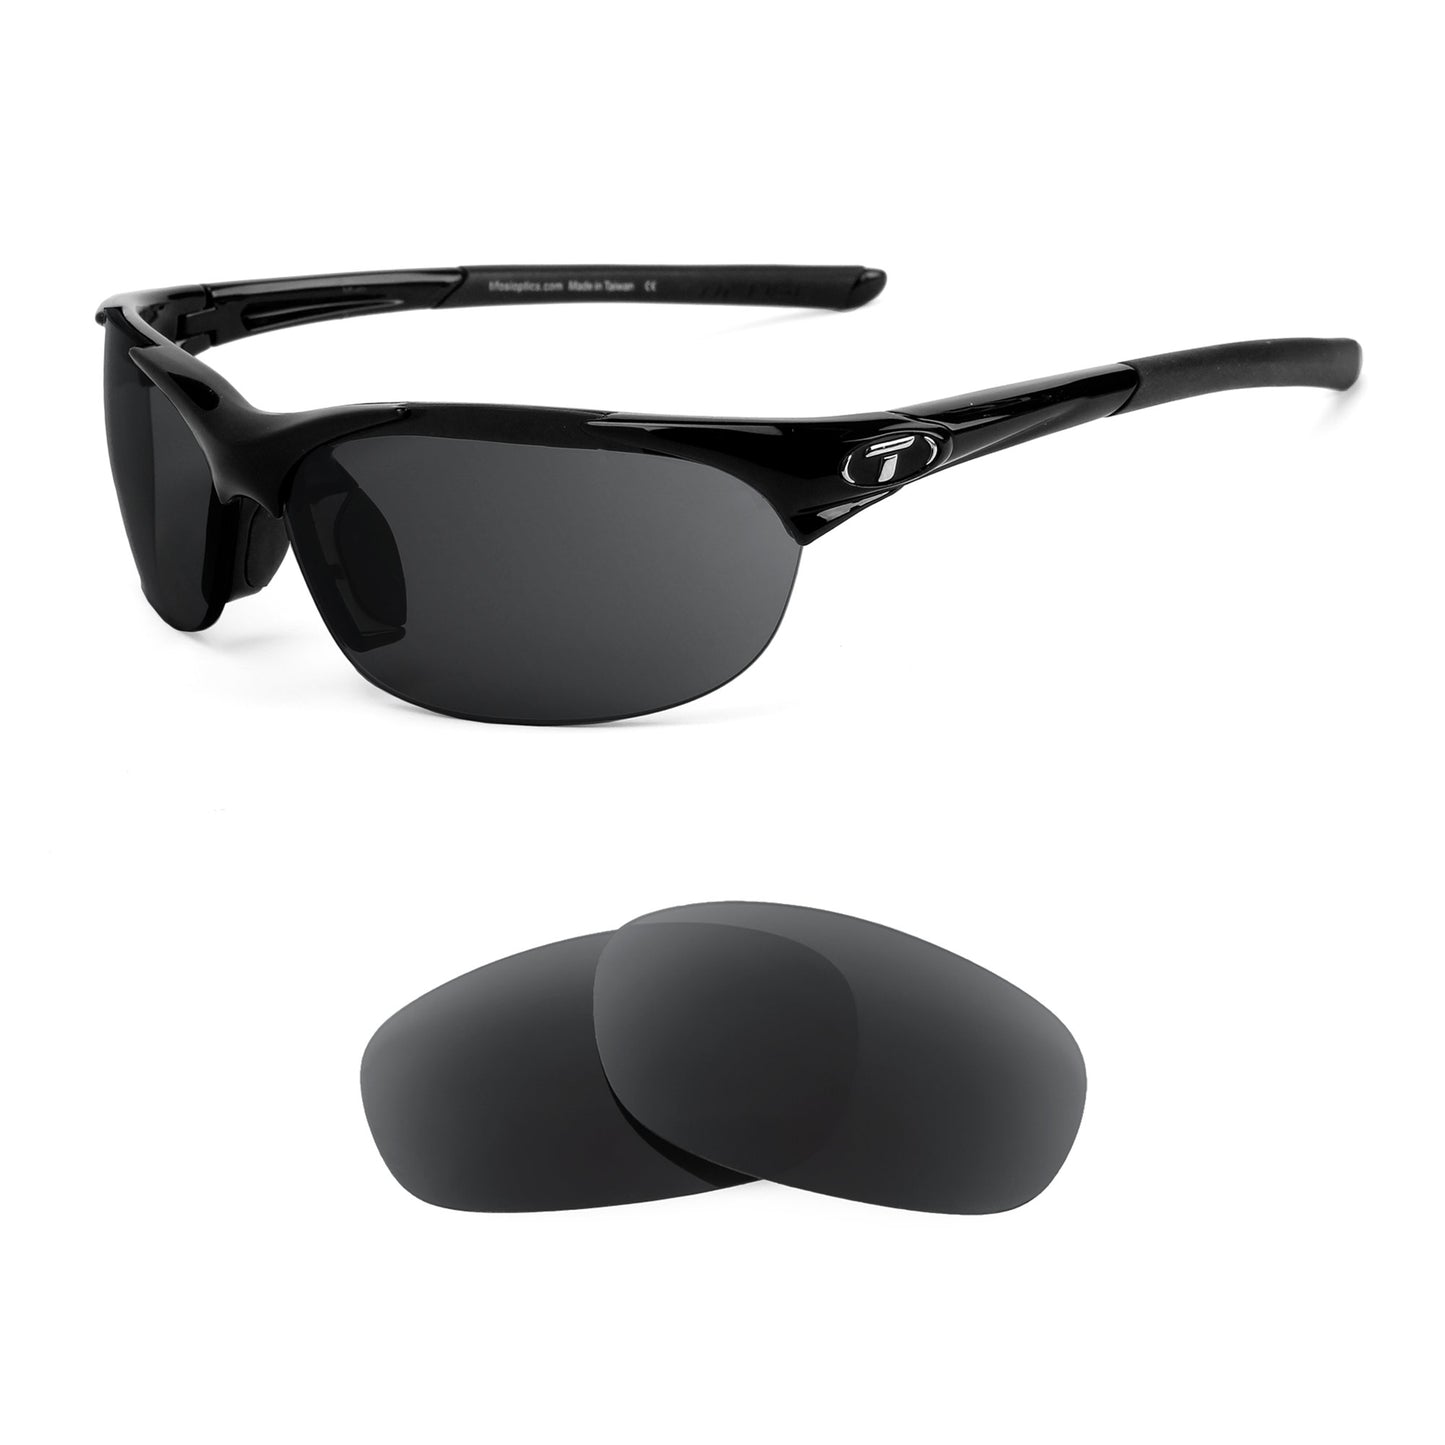 Tifosi Wisp sunglasses with replacement lenses